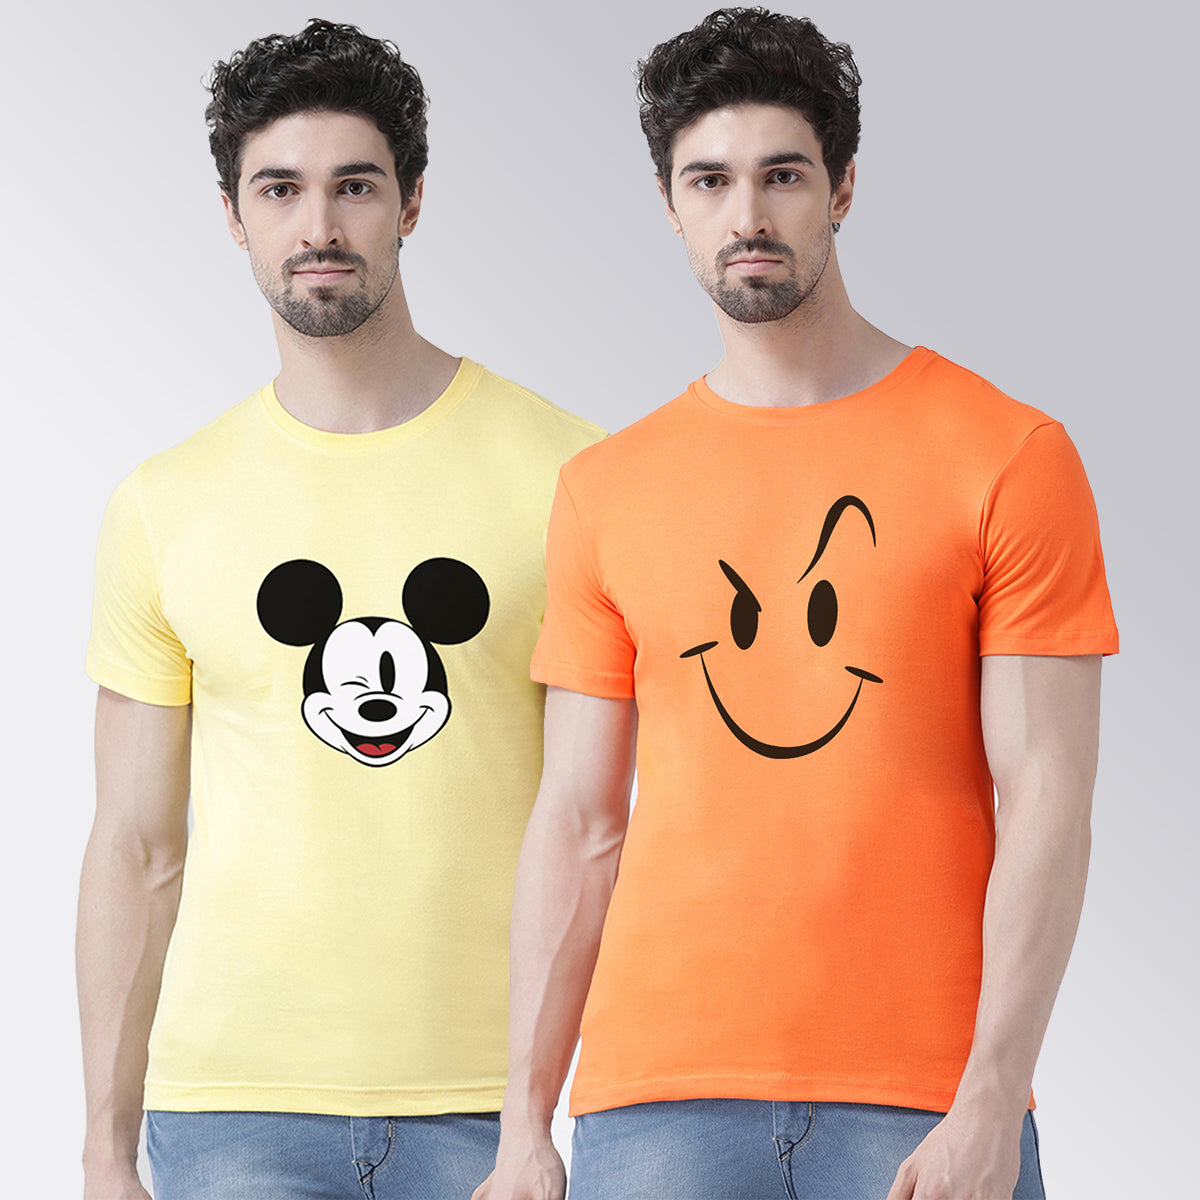 Men's Pack Of 2 Yellow & Orange Printed Half Sleeves T-Shirt - Friskers